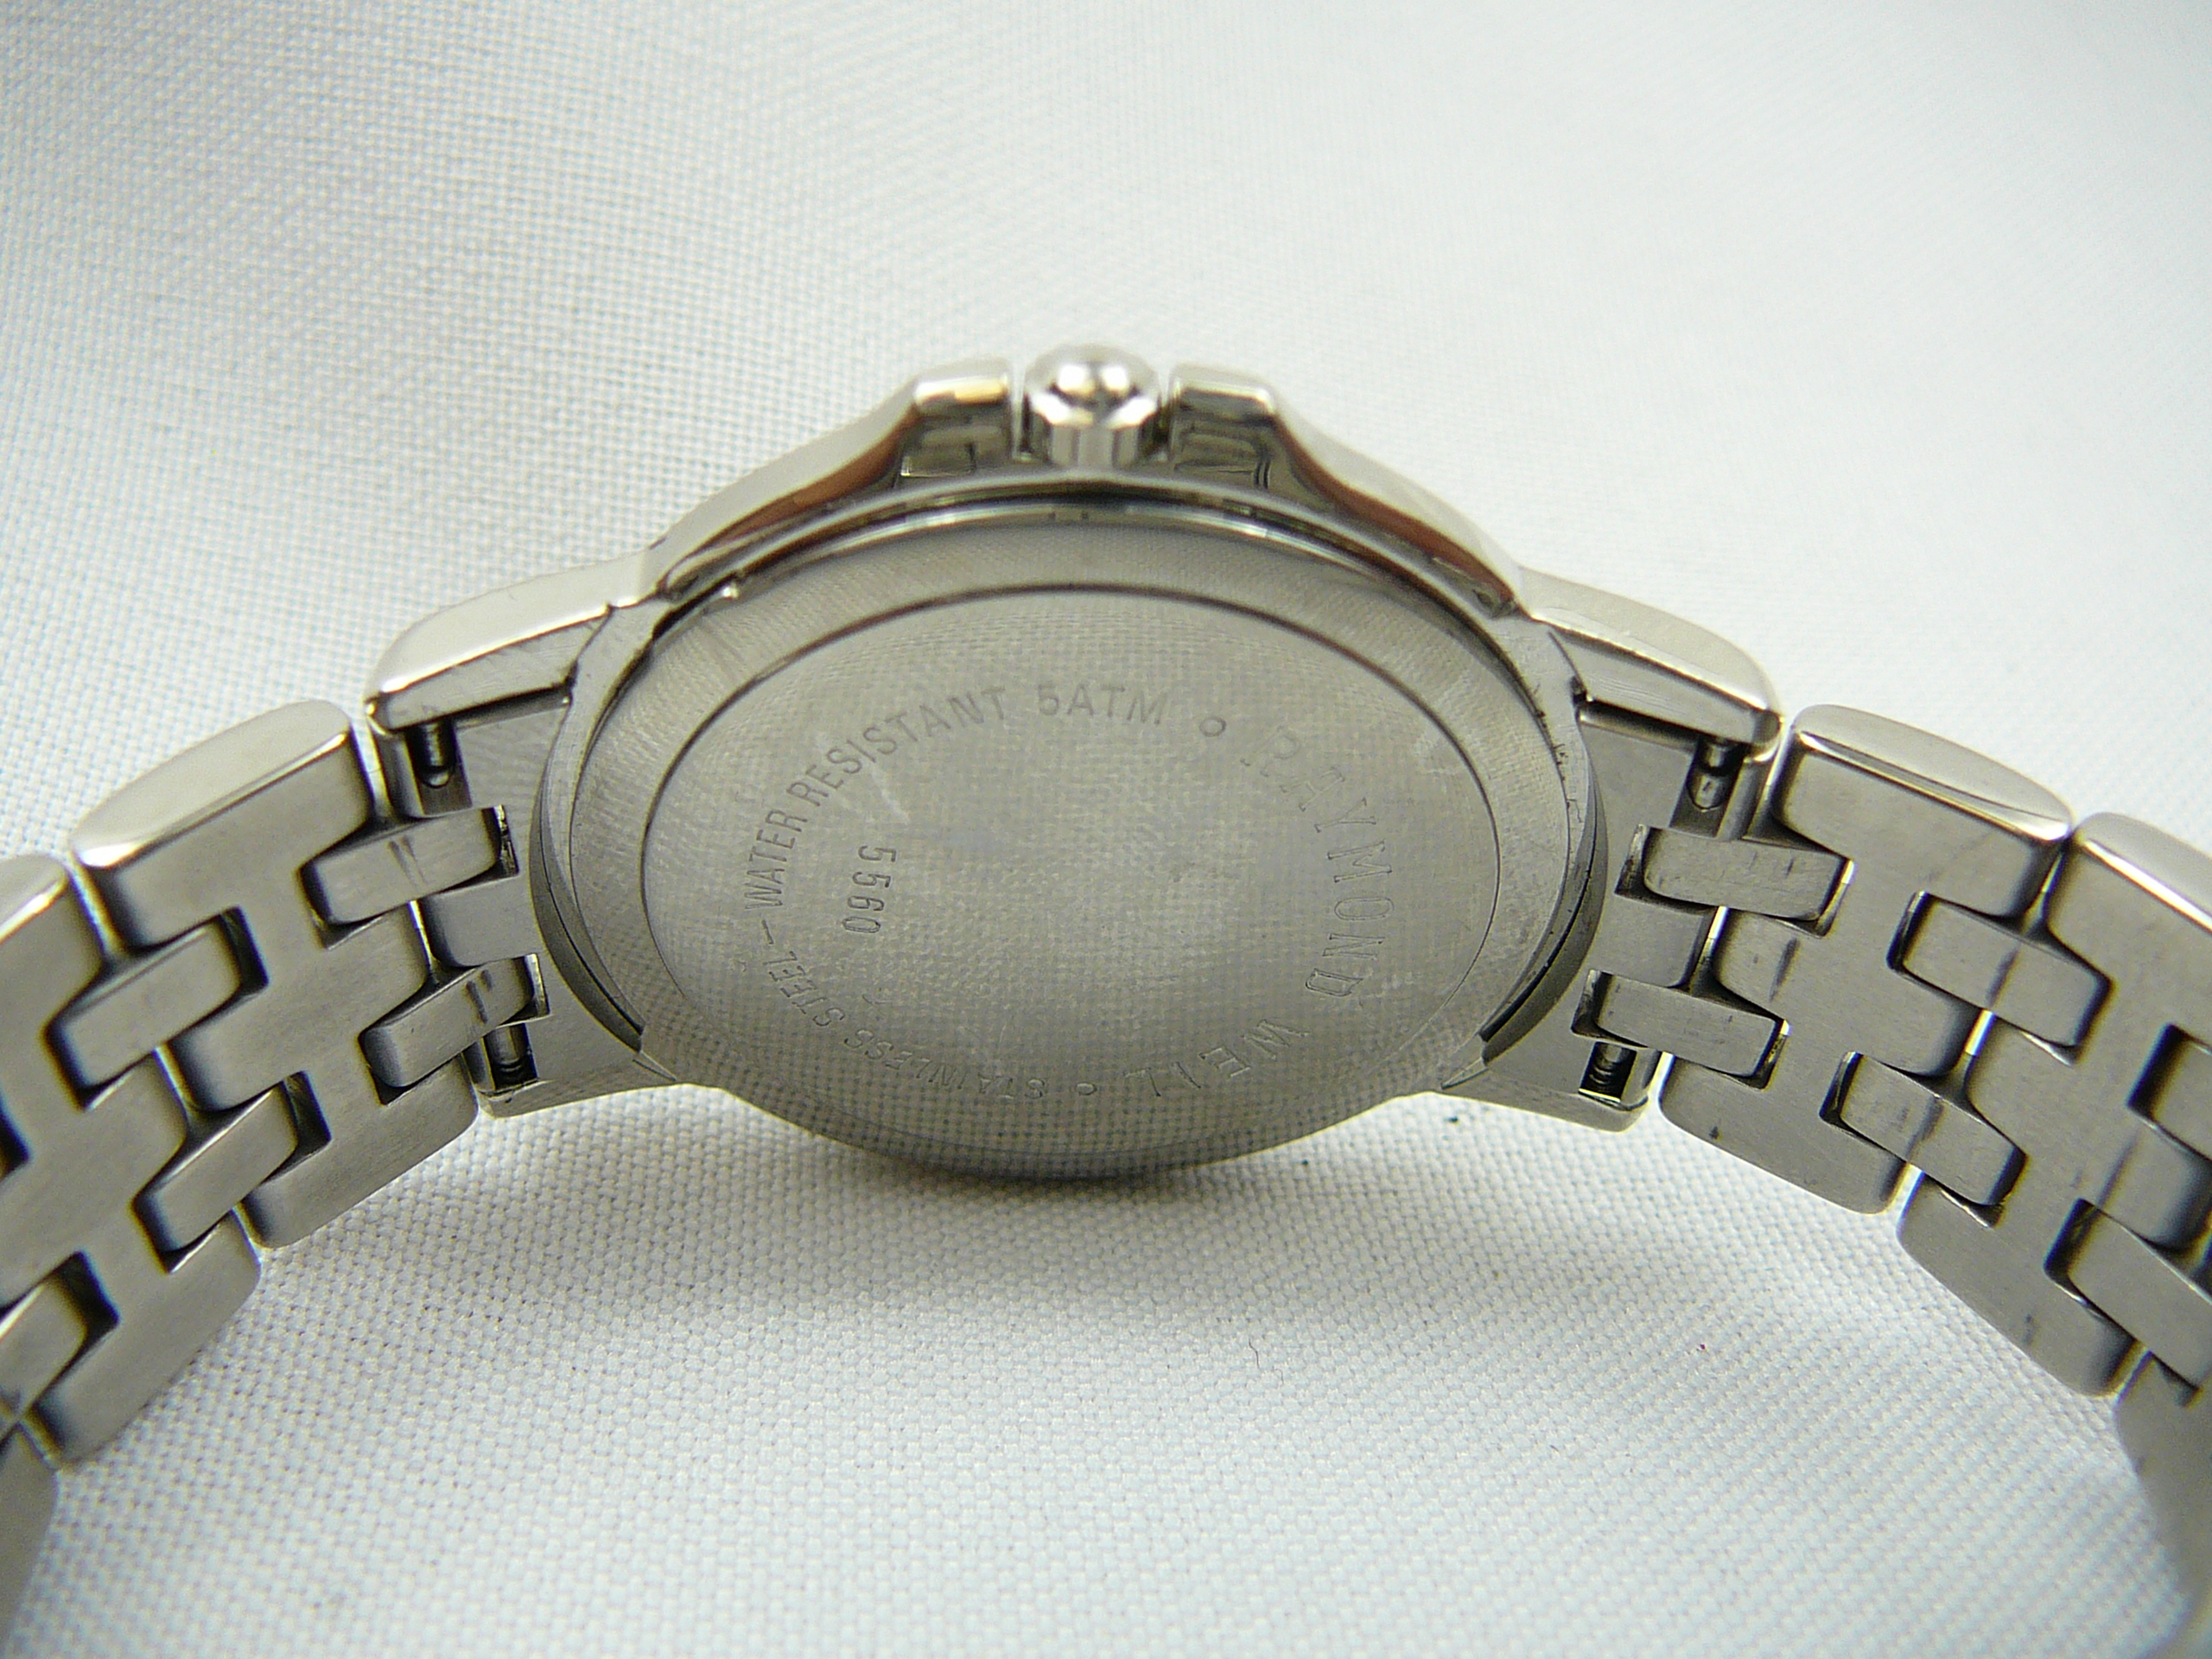 Gents Raymond Weil wrist watch, - Image 3 of 3